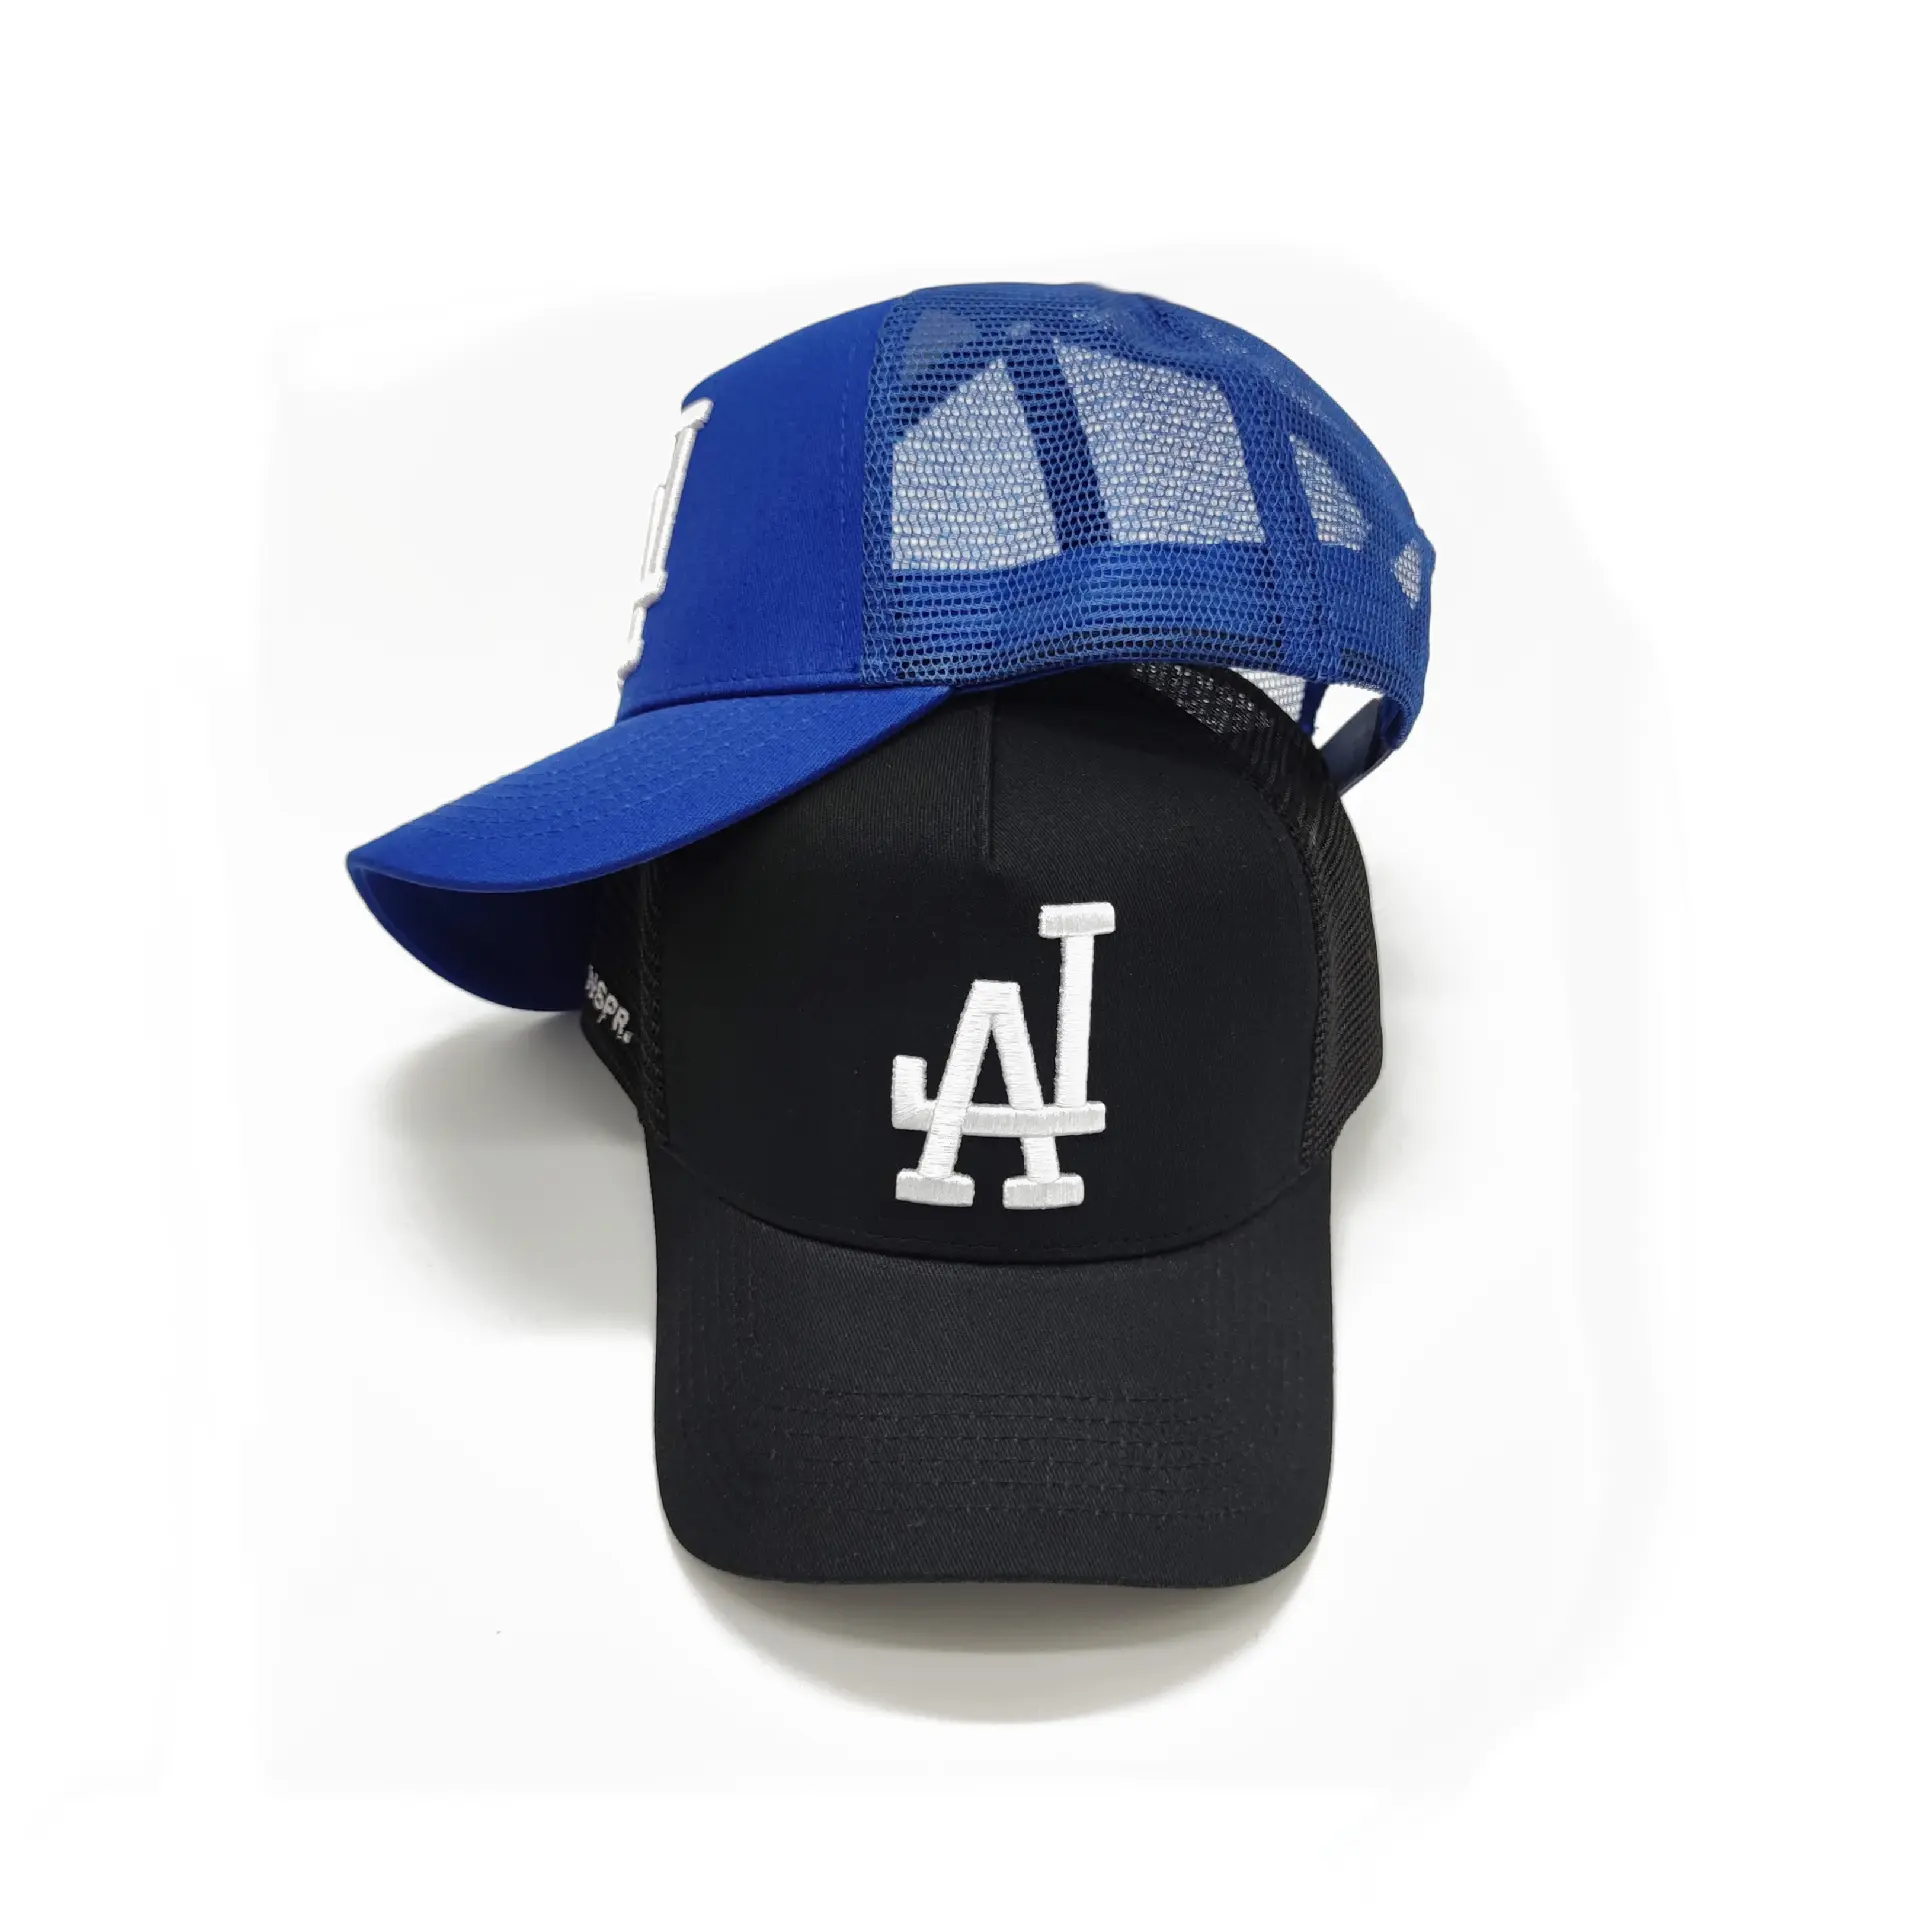 OEM بالجملة مخصص الصيف 5 لوحة 3D التطريز شعار خمر la شبكة Snapback قبعة سائق الشاحنة تركيبها قبعة بيسبول رياضية